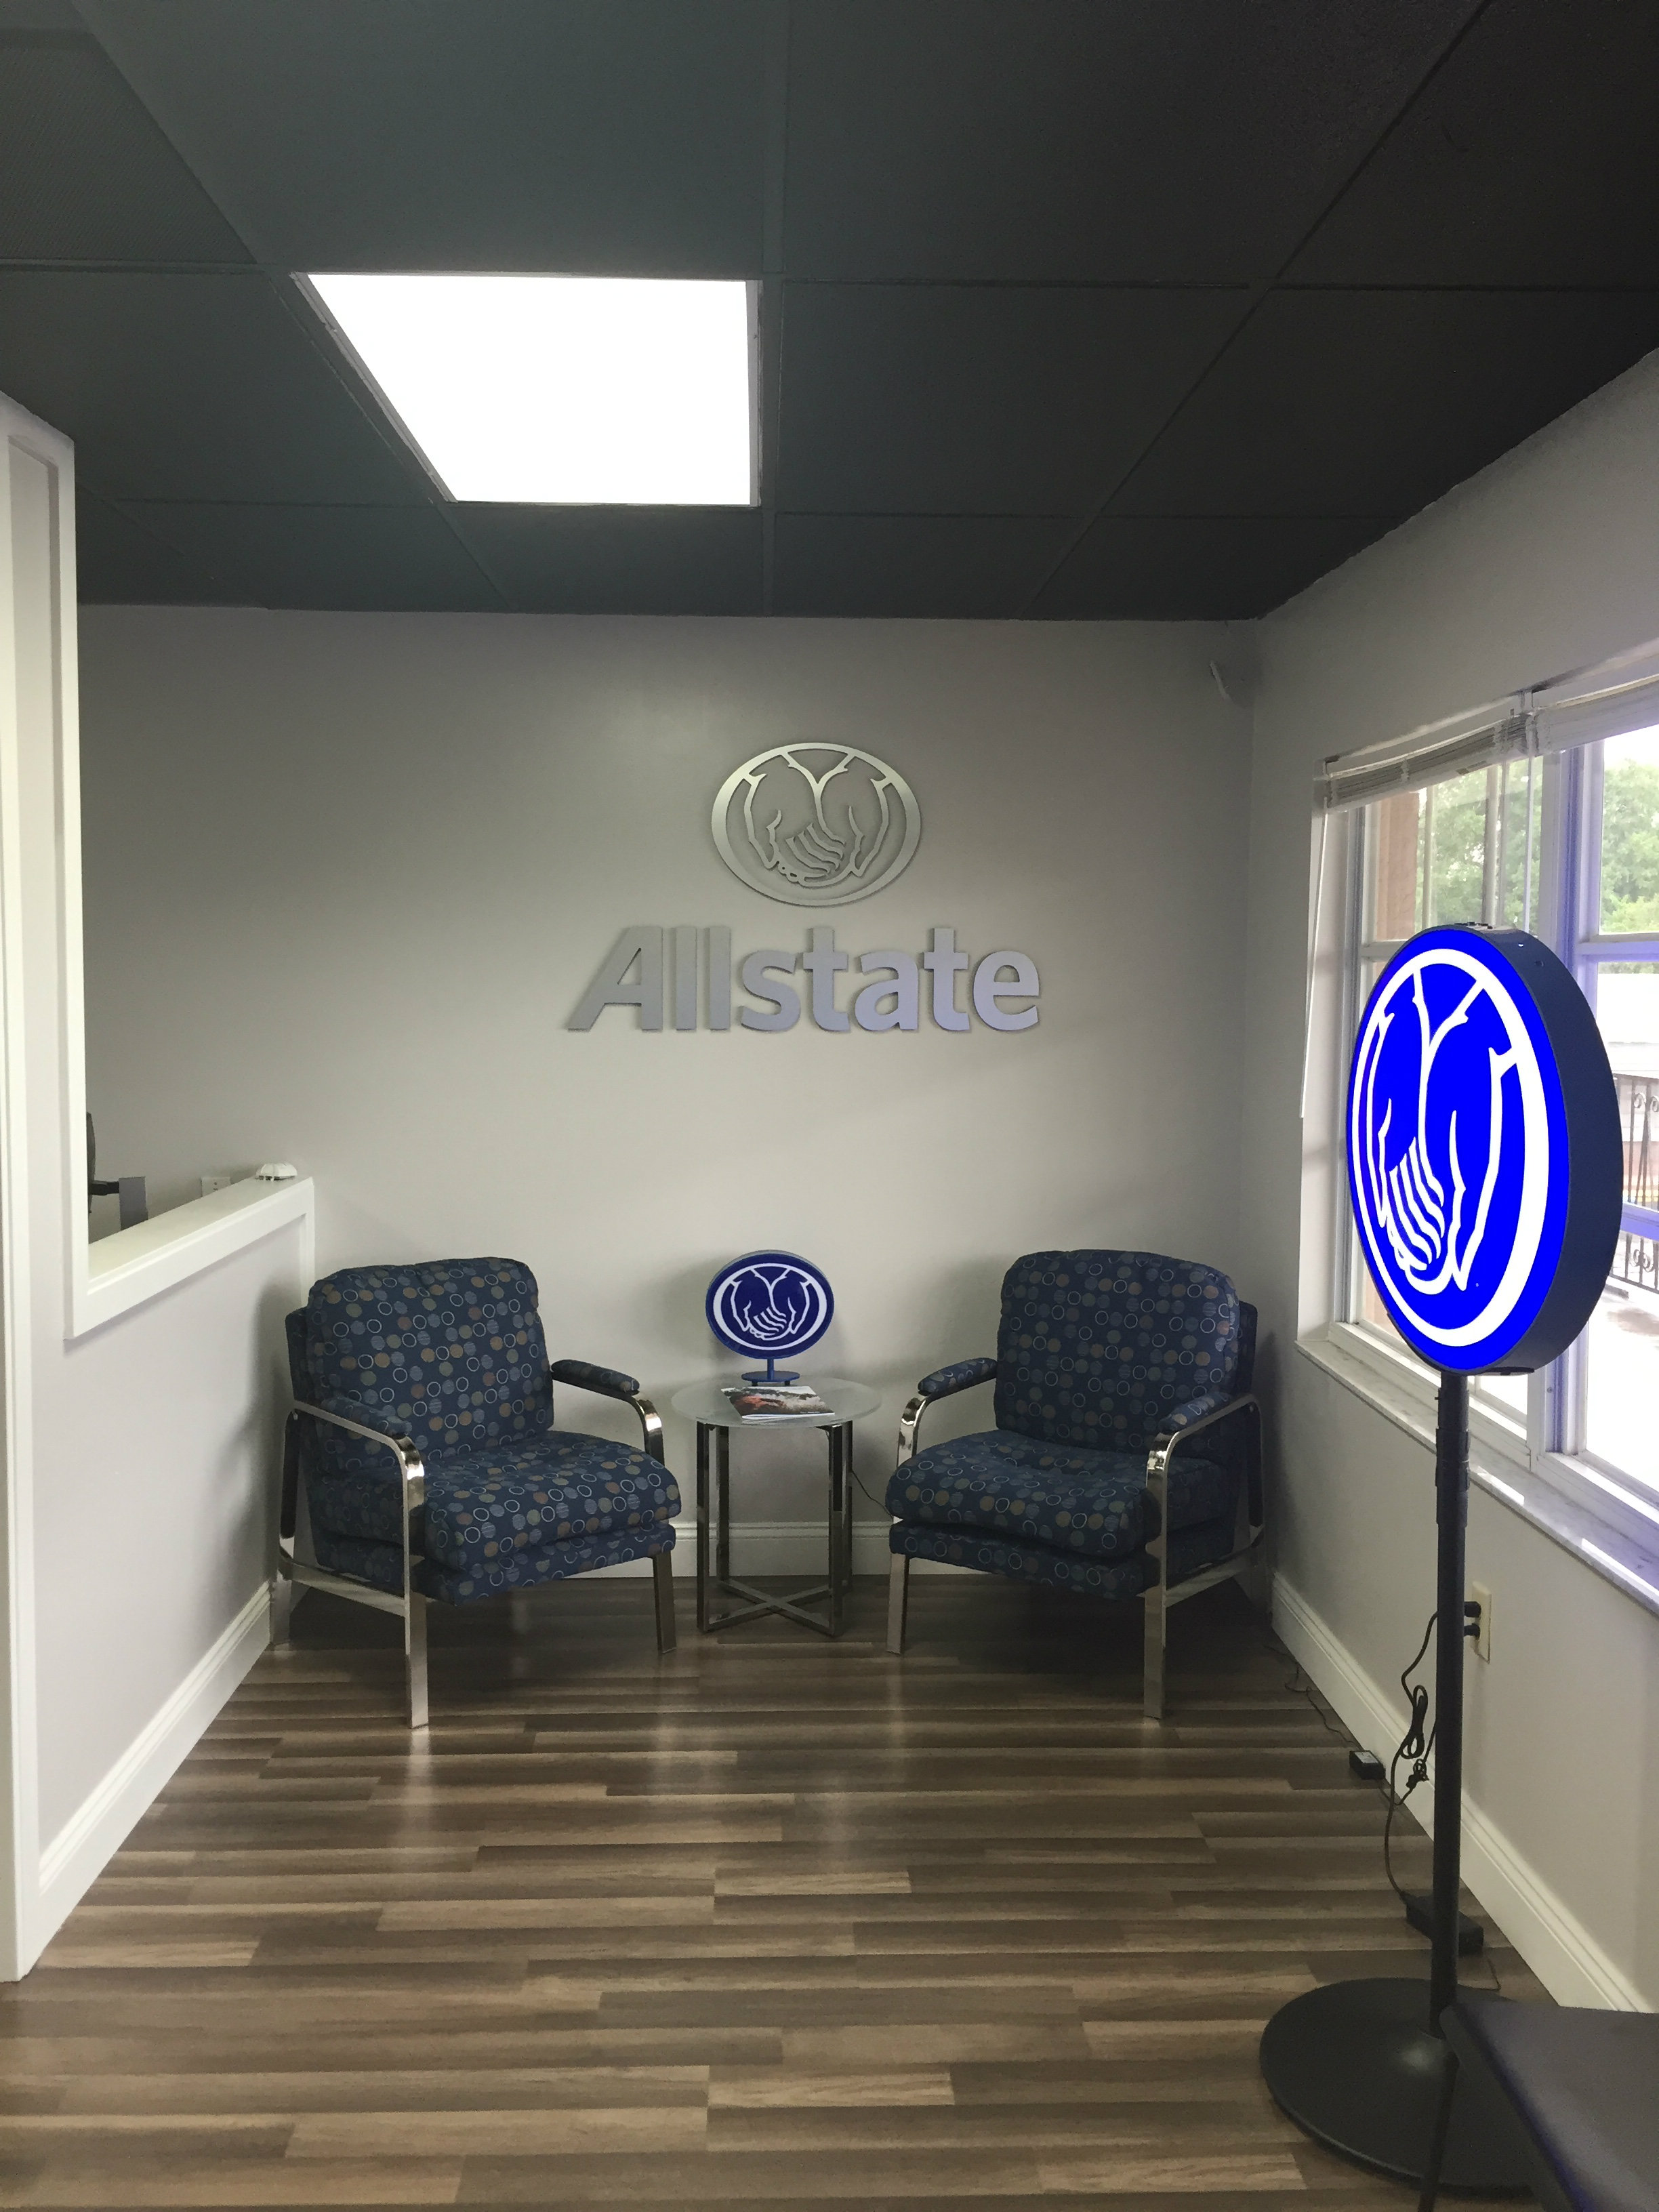 Lance Stephens: Allstate Insurance Photo